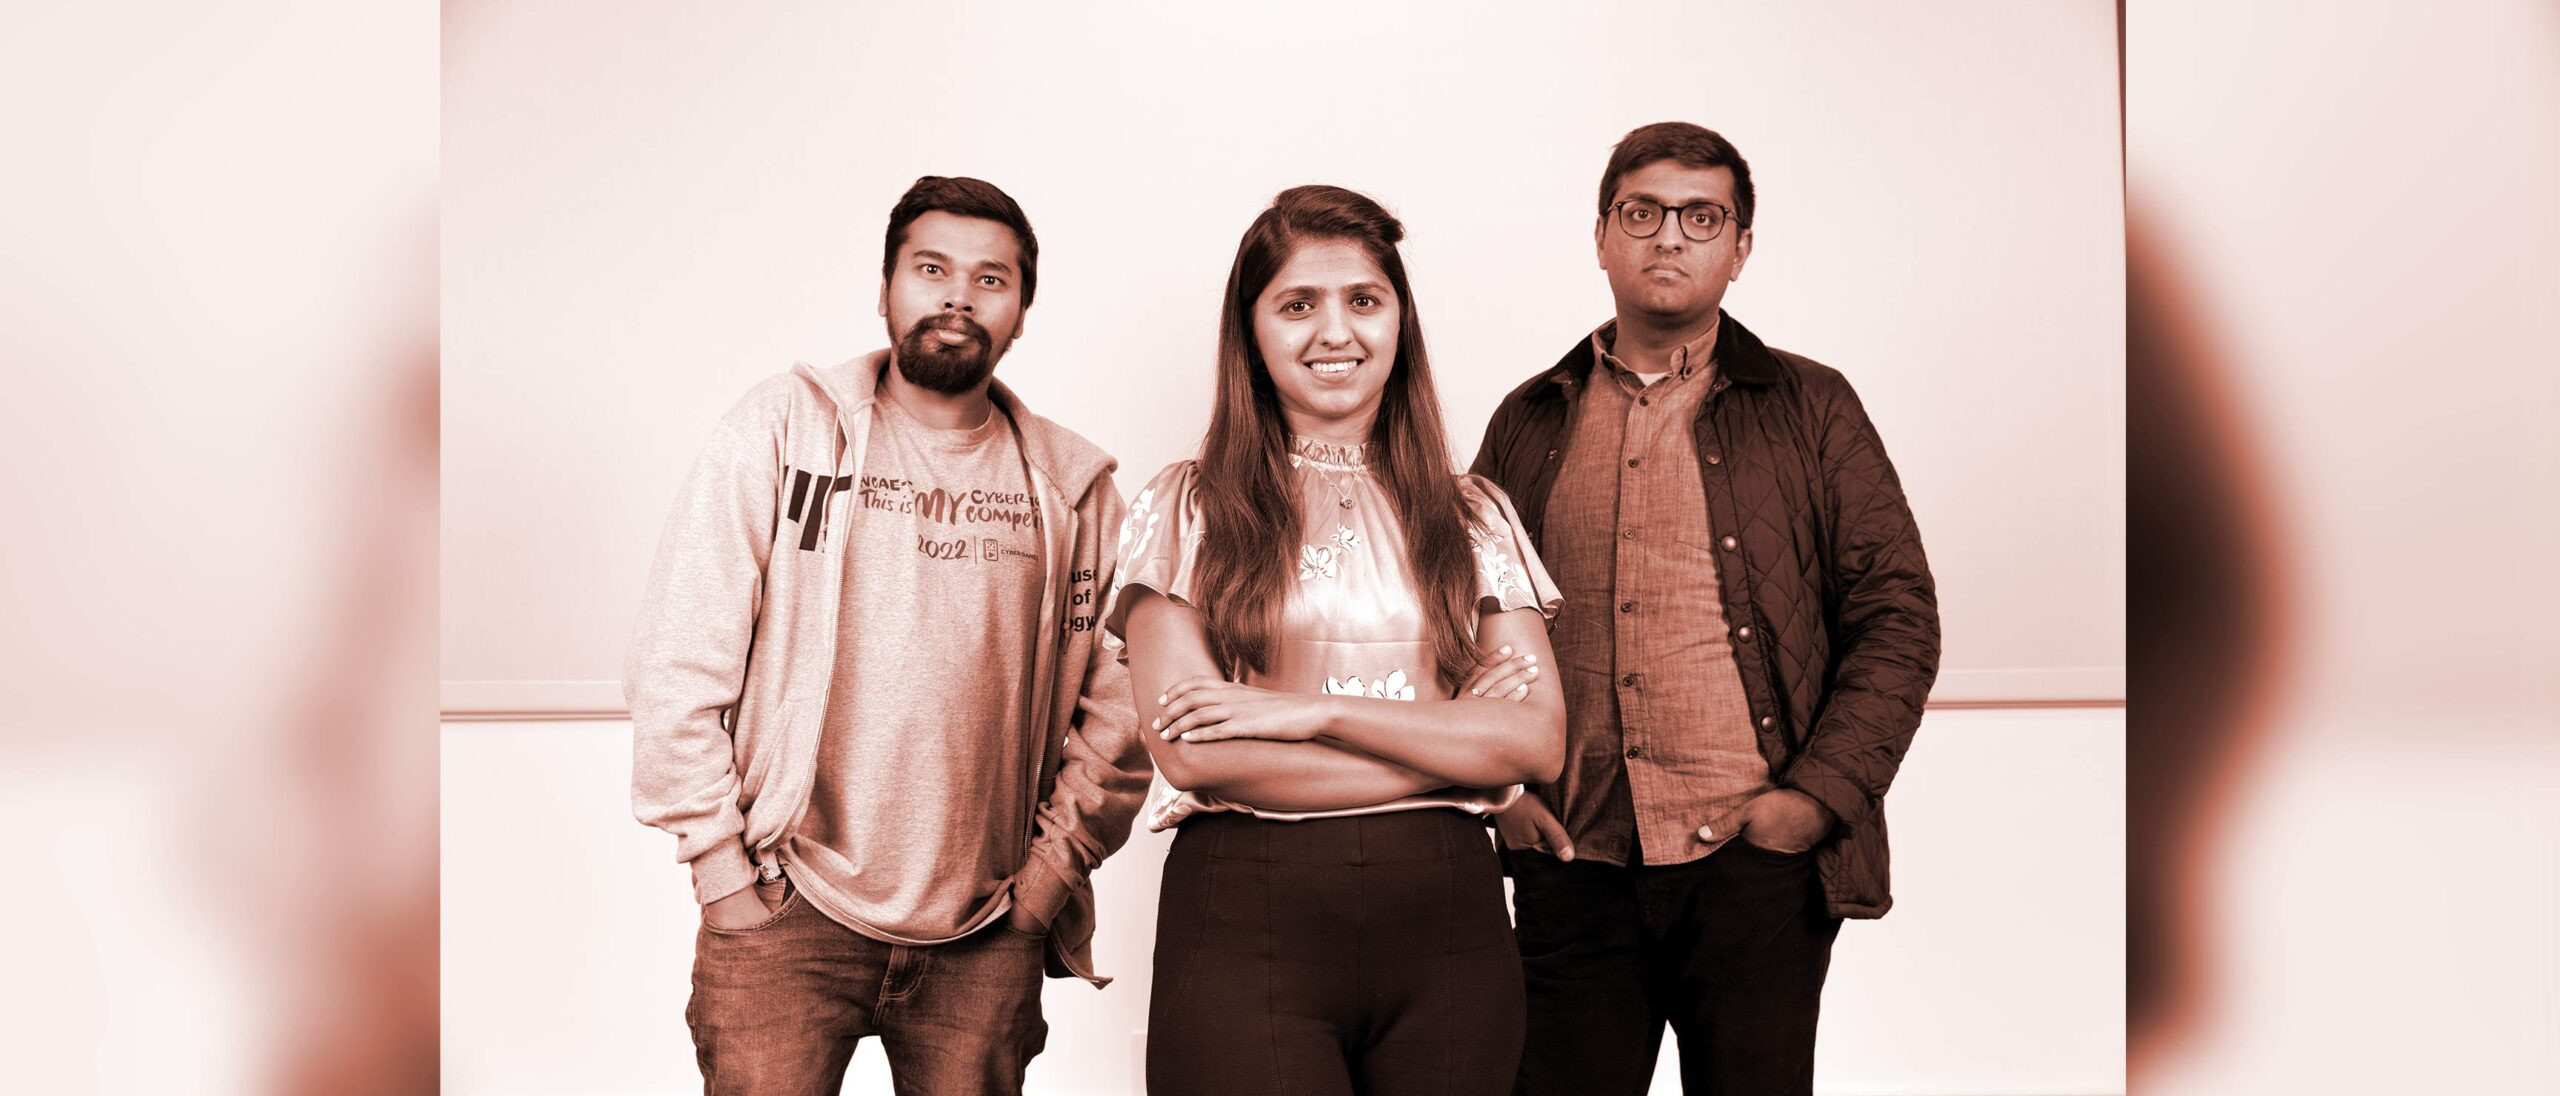 Pakistani healthcare startup wins k award at Harvard